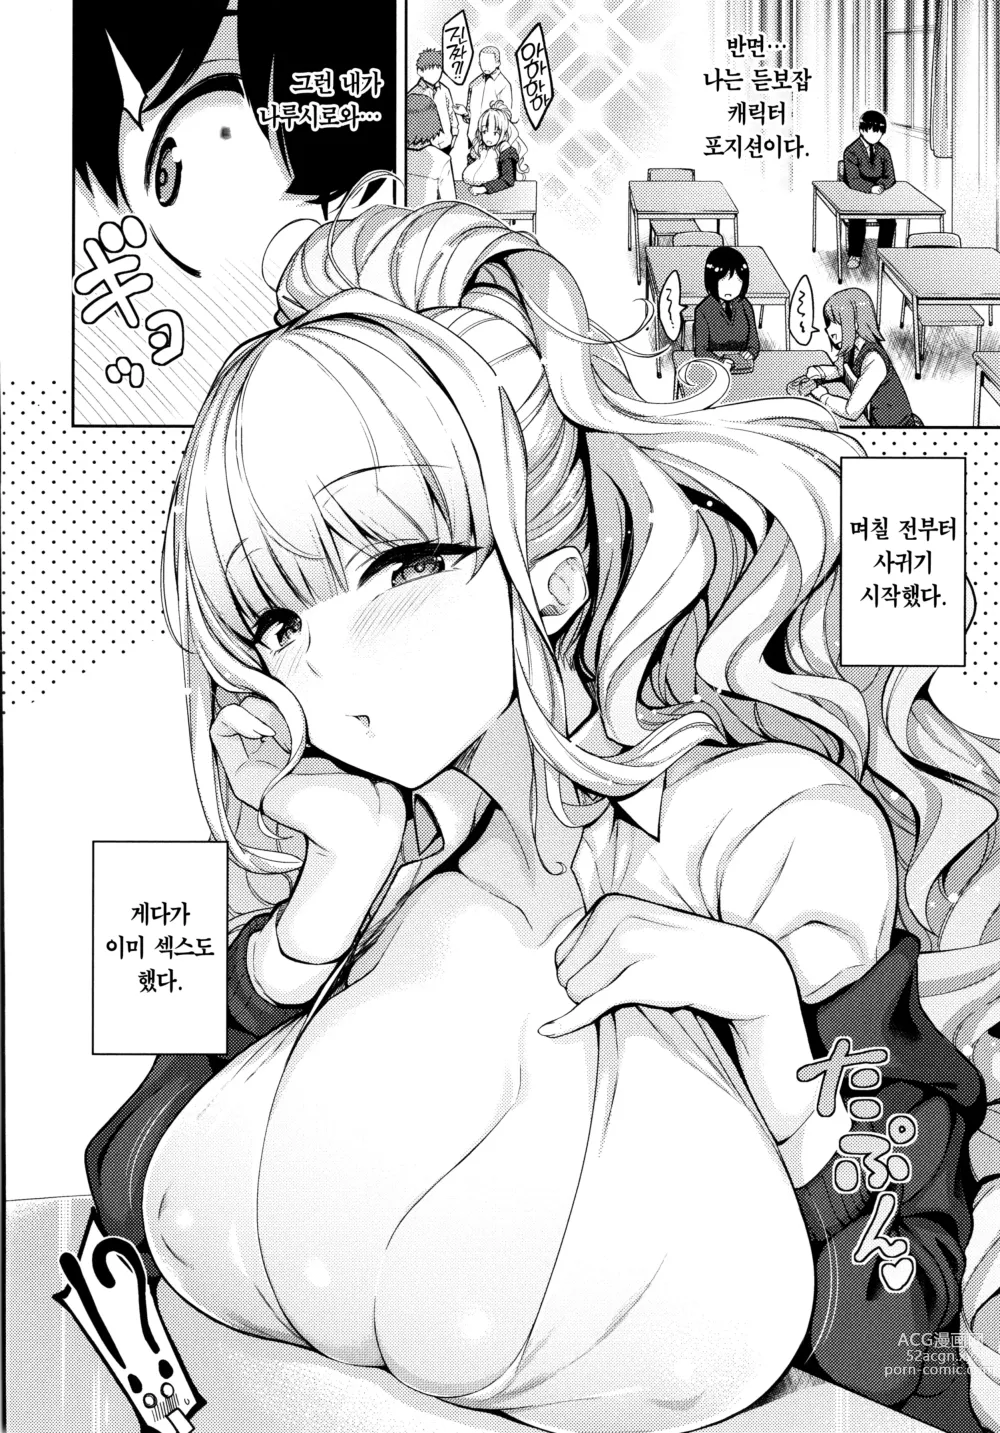 Page 8 of manga Kanojo wa Sukidarake